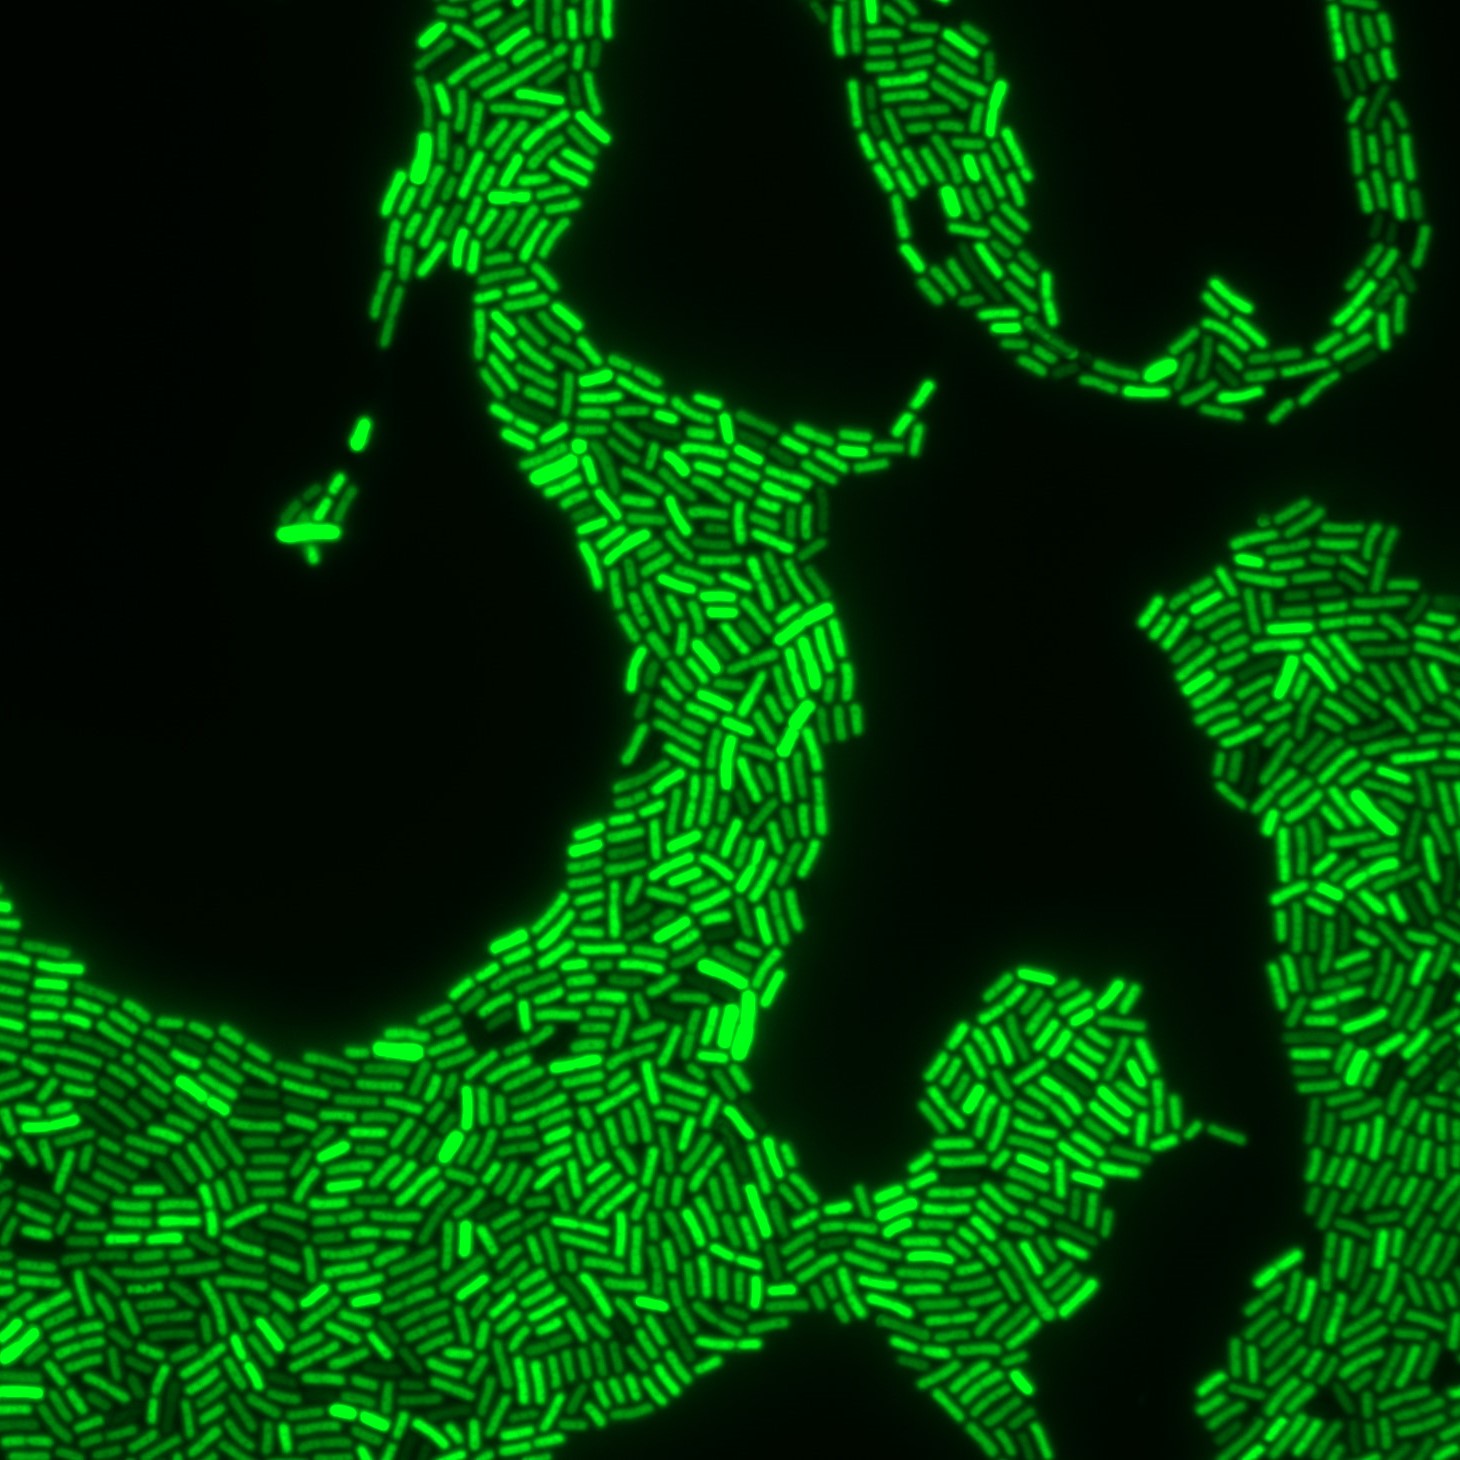 Cyanobacteria as seen under a microscope